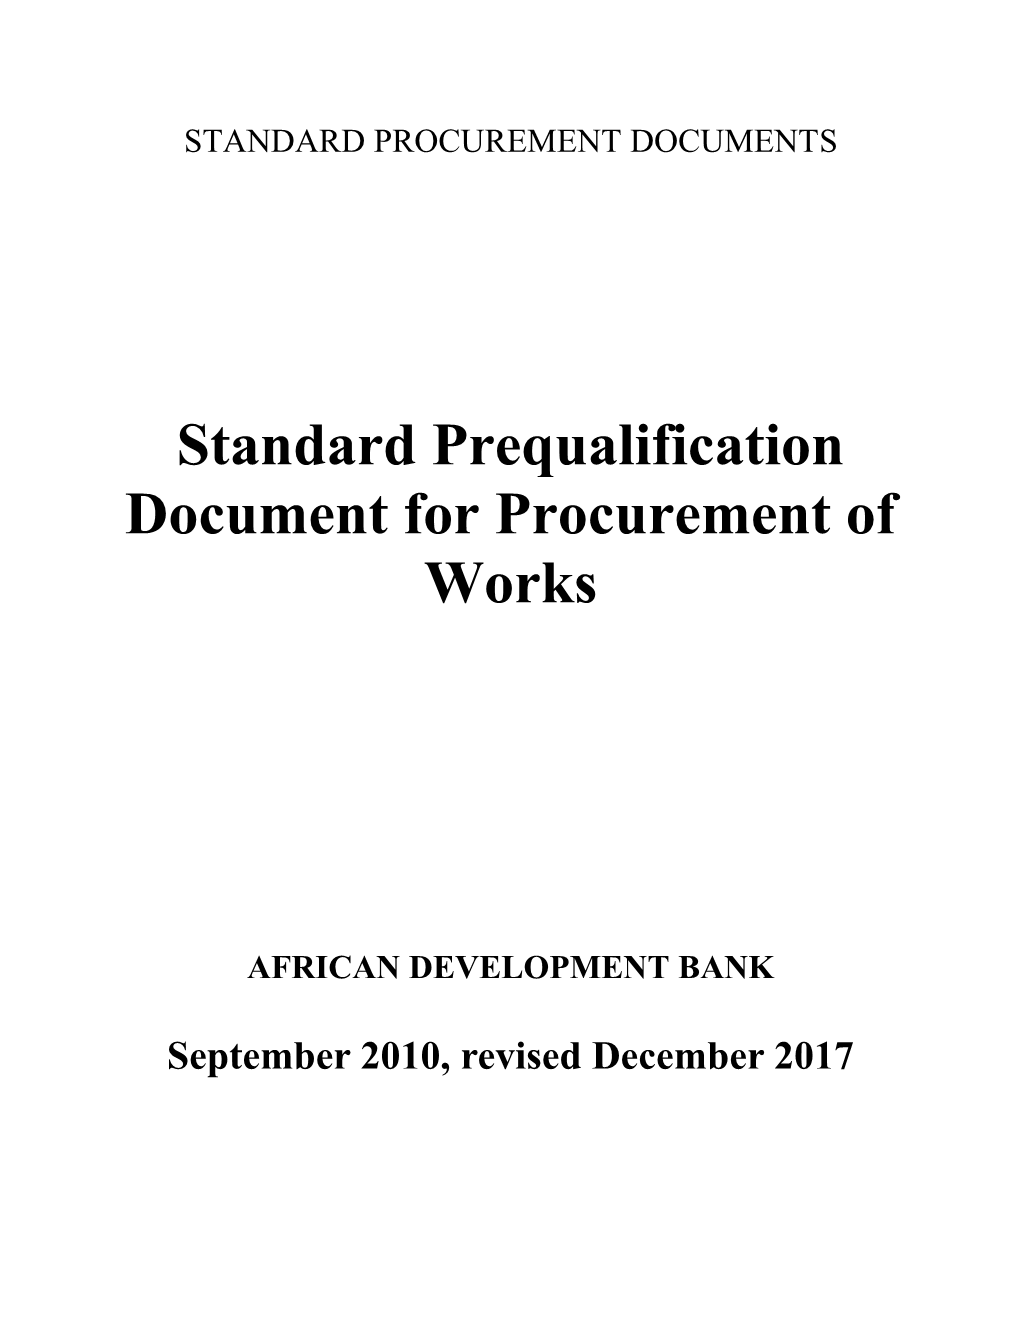 Procurement Documents - Prequalification for Procurement of Works